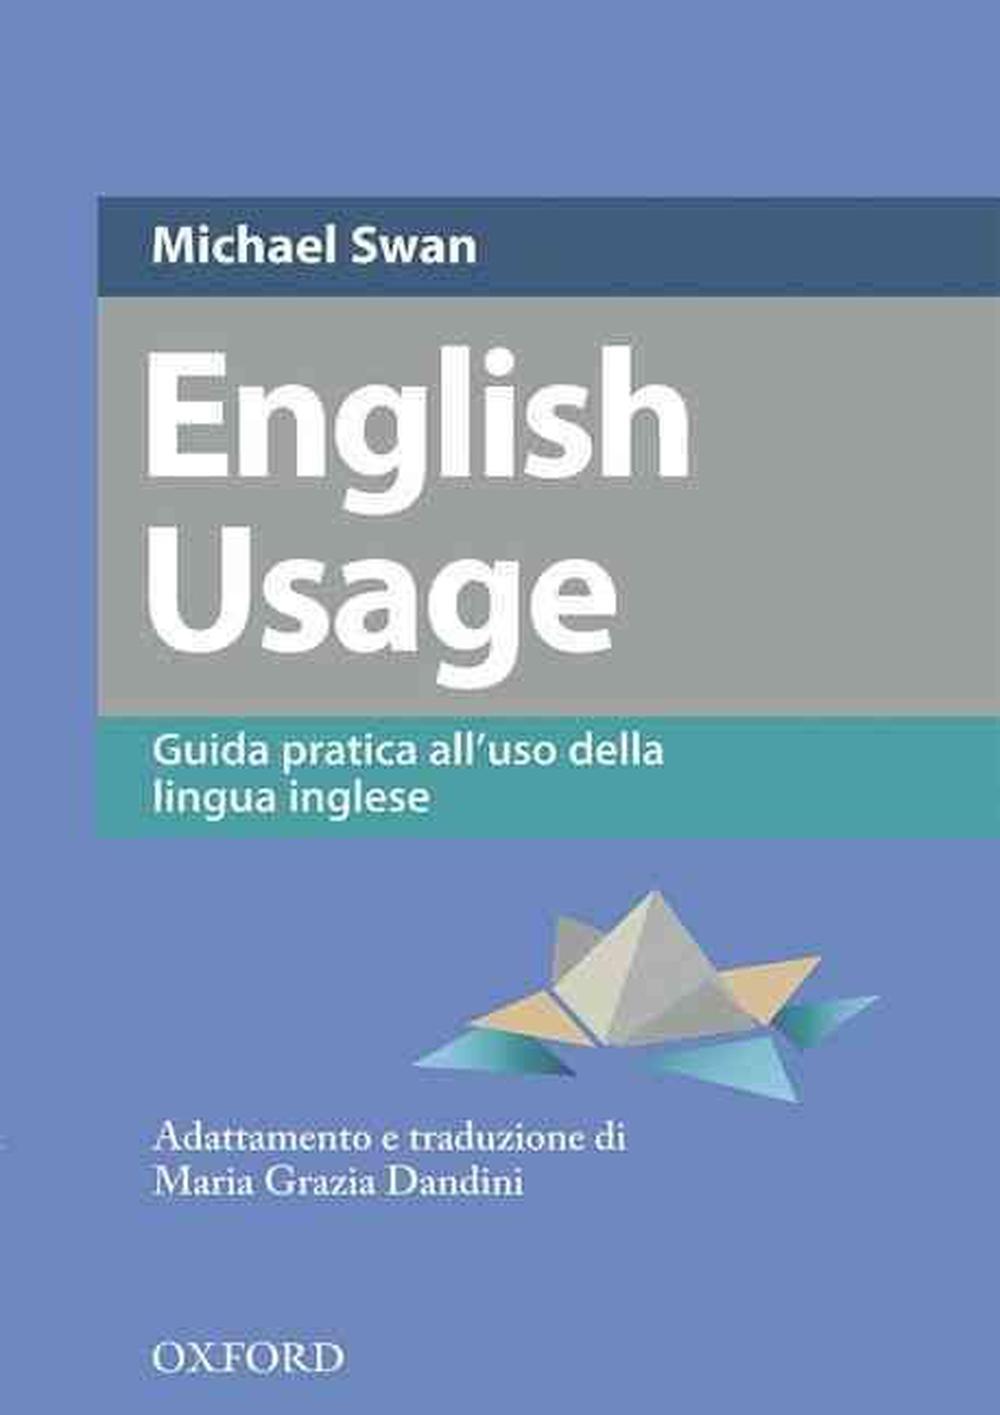 Basic English Usage by Michael Swan (English) Paperback Book Free Shipping! 9780194311878 eBay